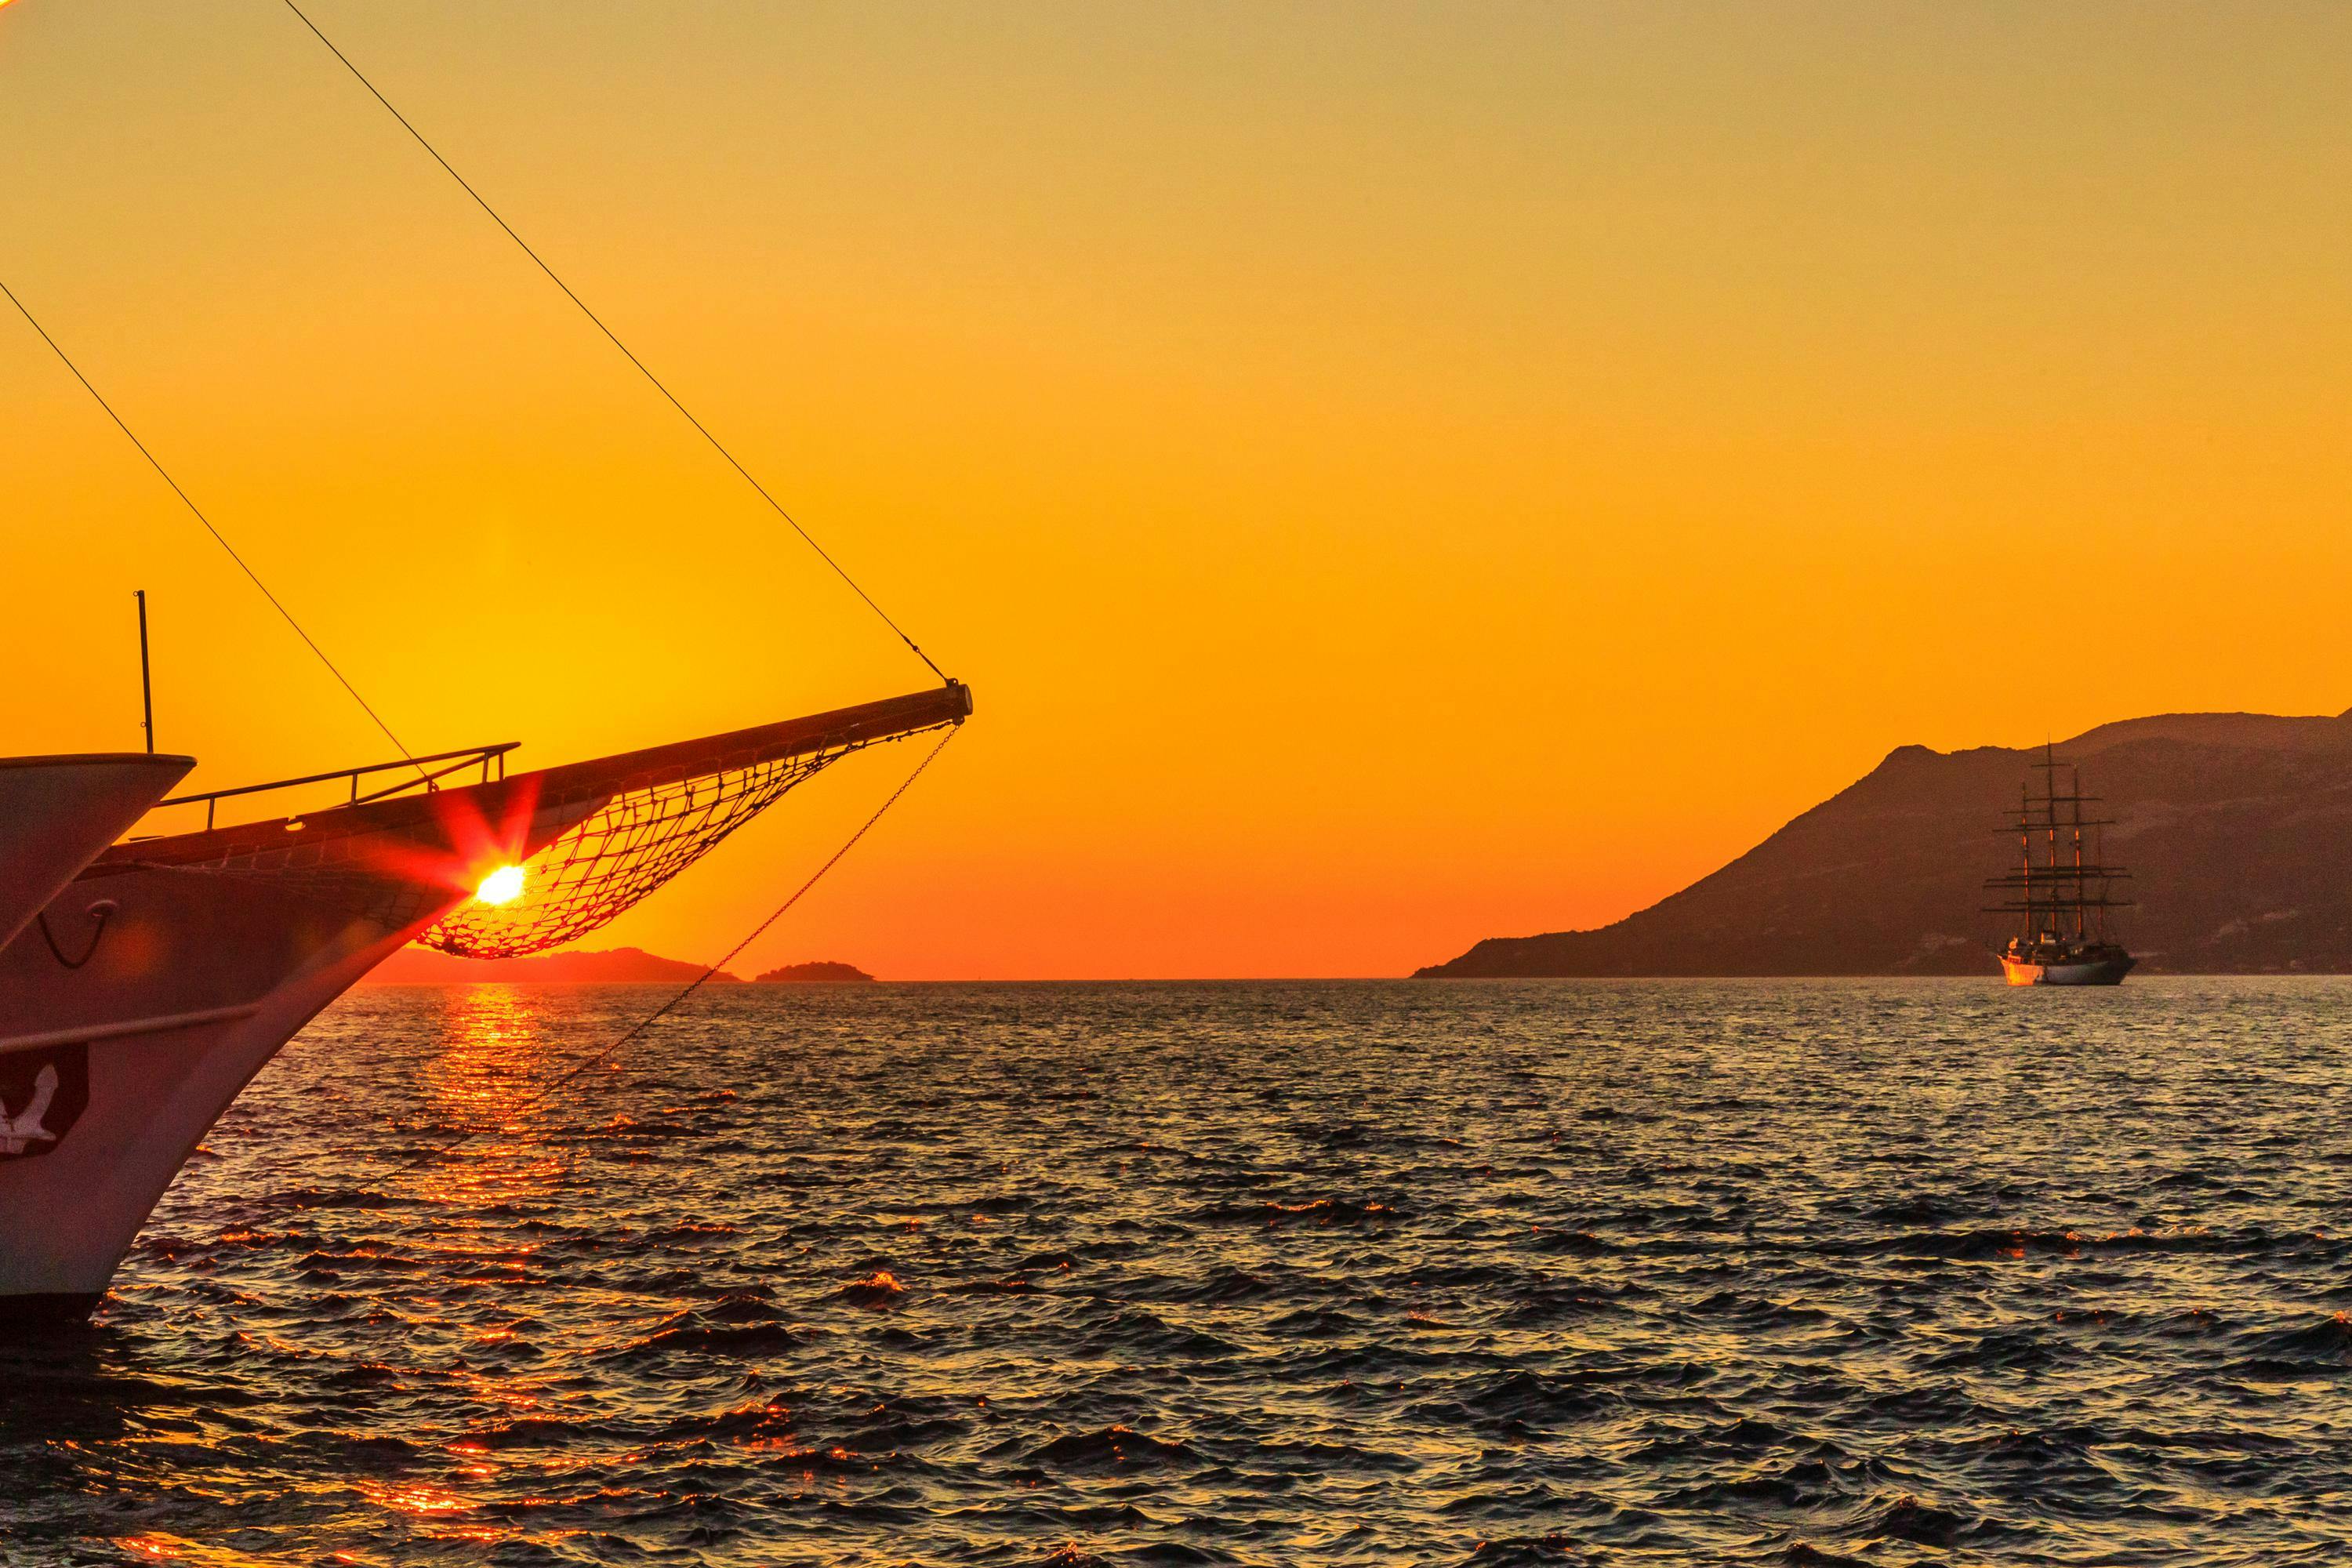 A sunset view from the ship Sea Cloud on the Dalmatian Coast, Adriatic Sea, Mediterranean, Croatia.